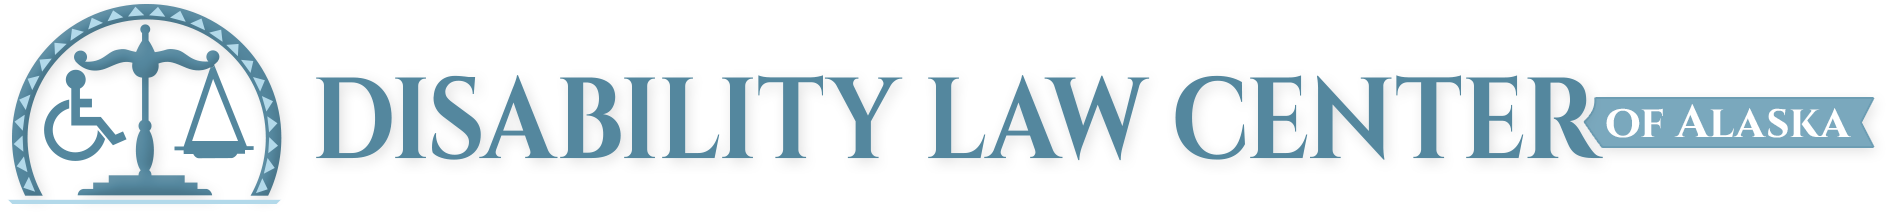 Disability Law Center of Alaska Logo